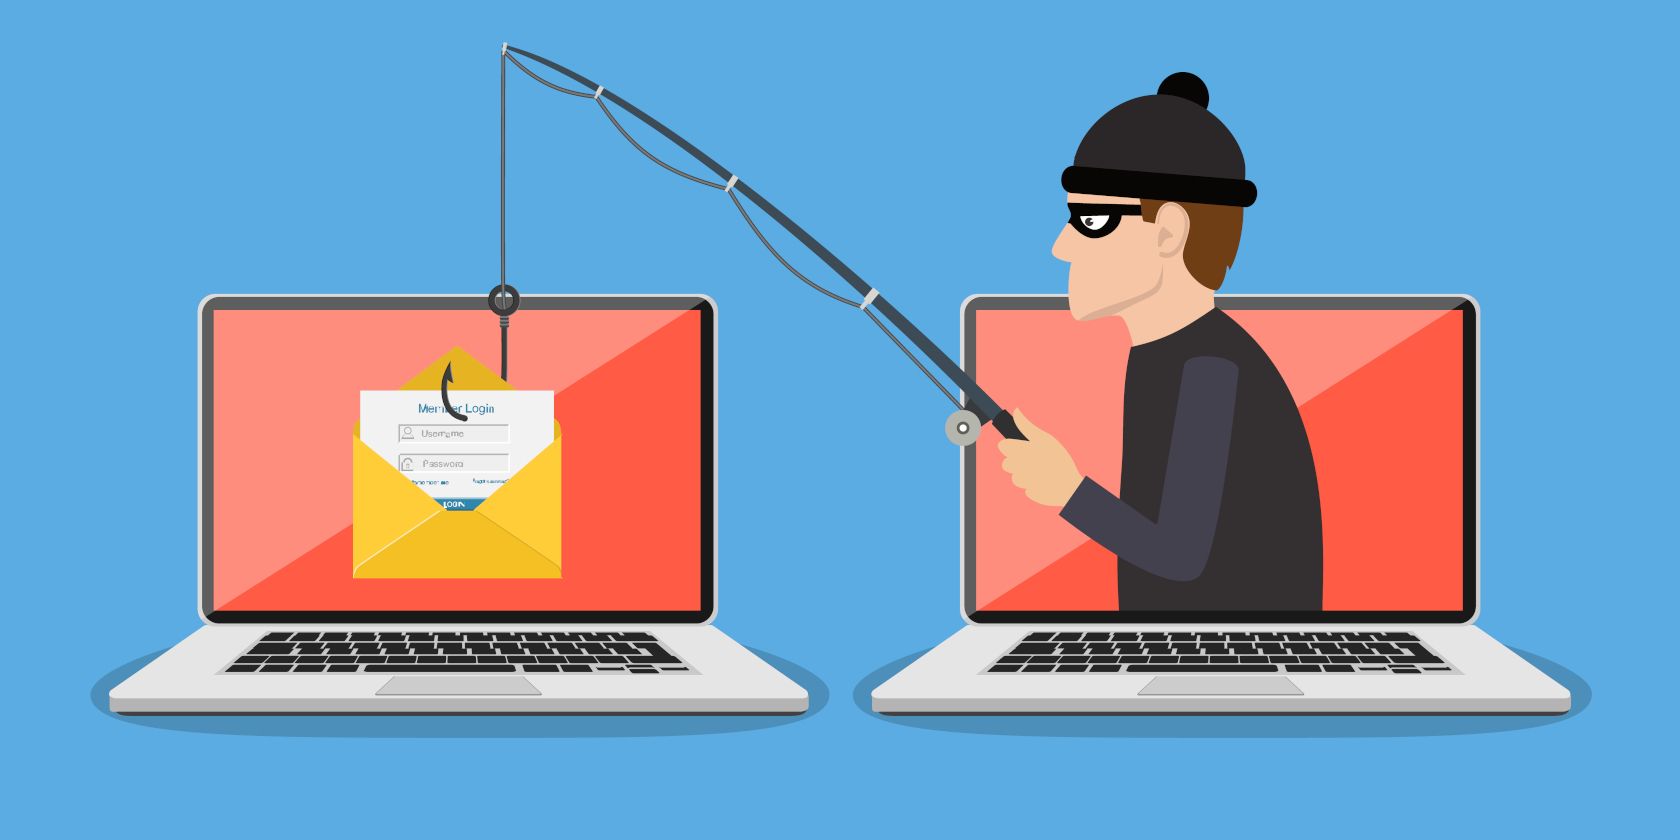 A thief stealing data using phishing